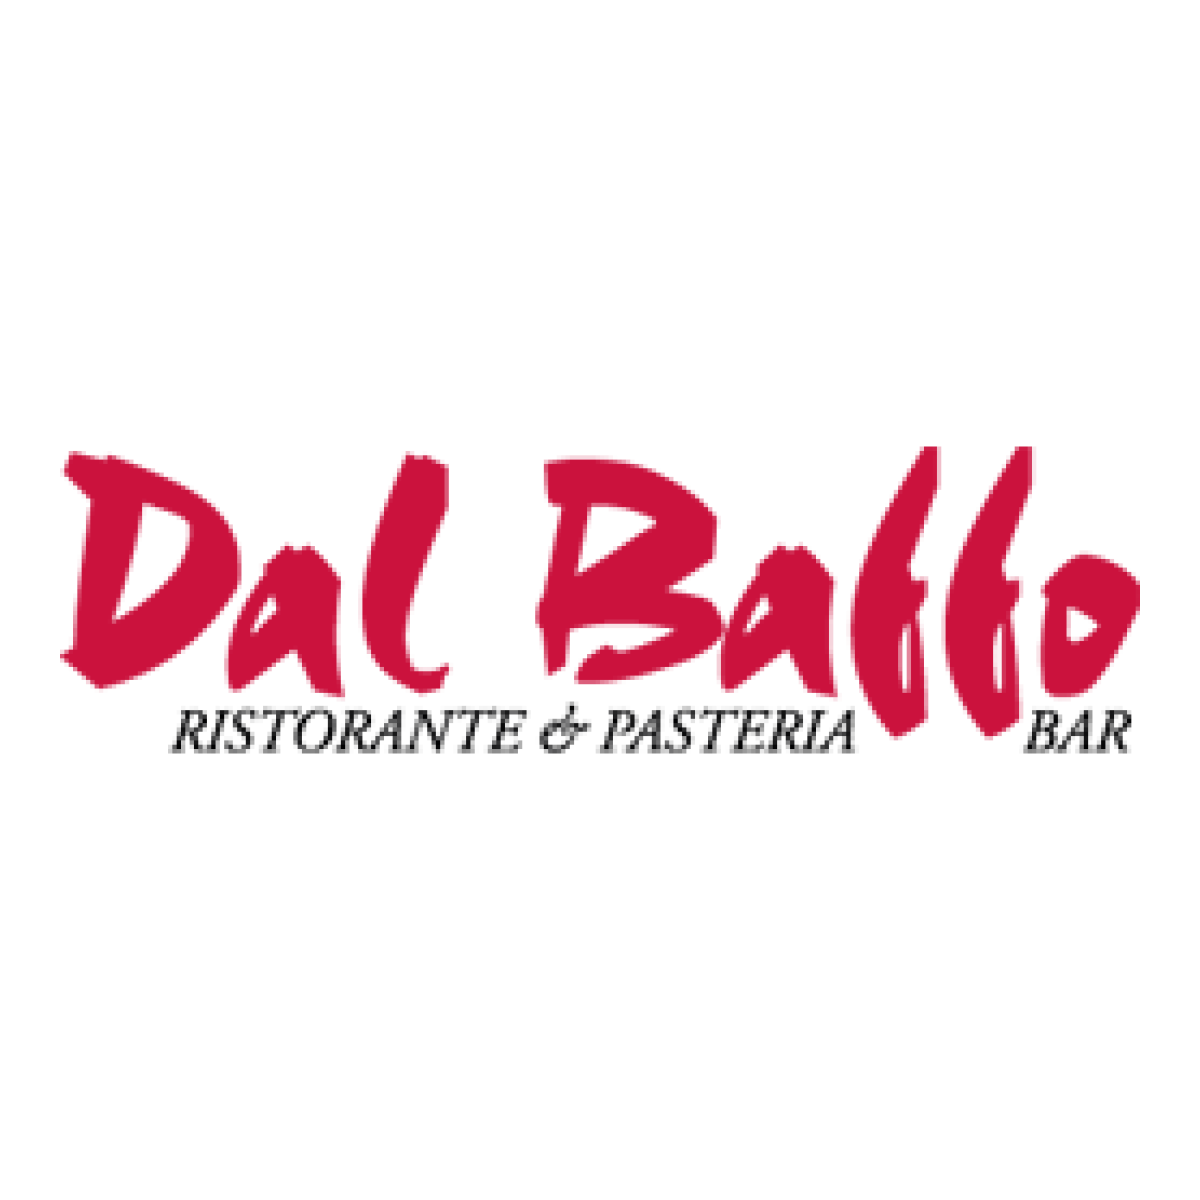 logo_db